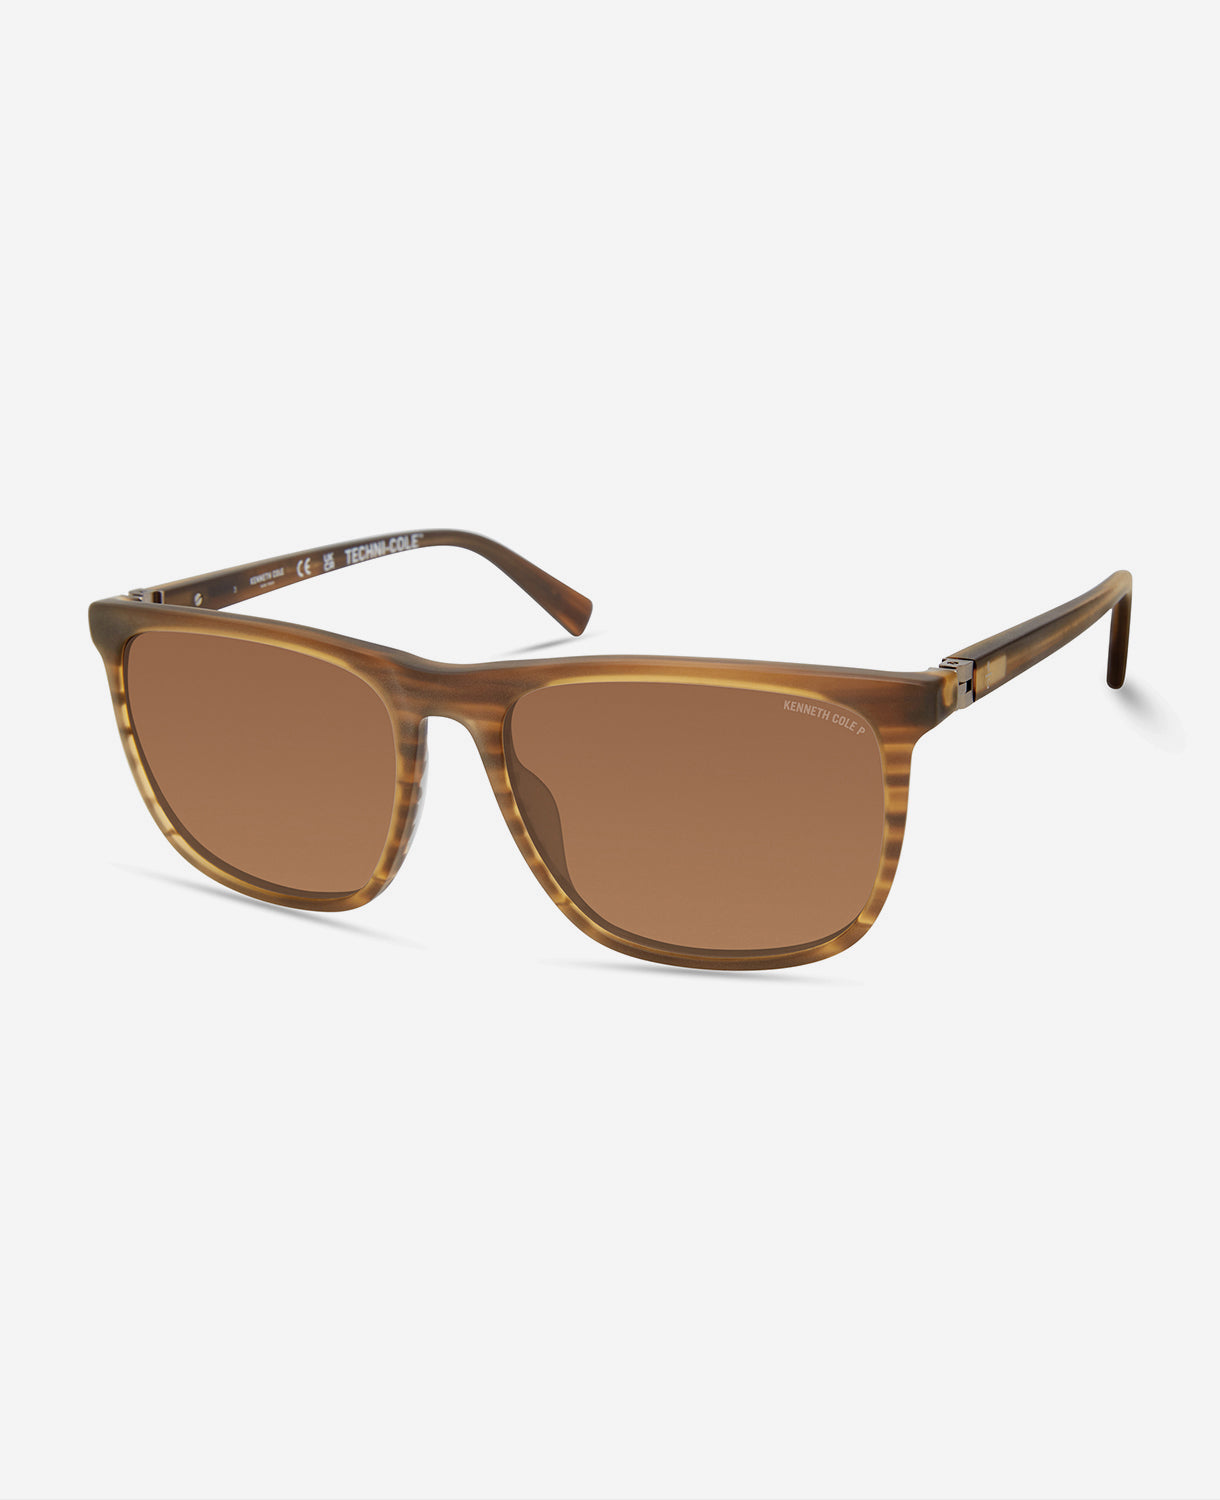 Kenneth Cole Bio-acetate Brown Sunglasses